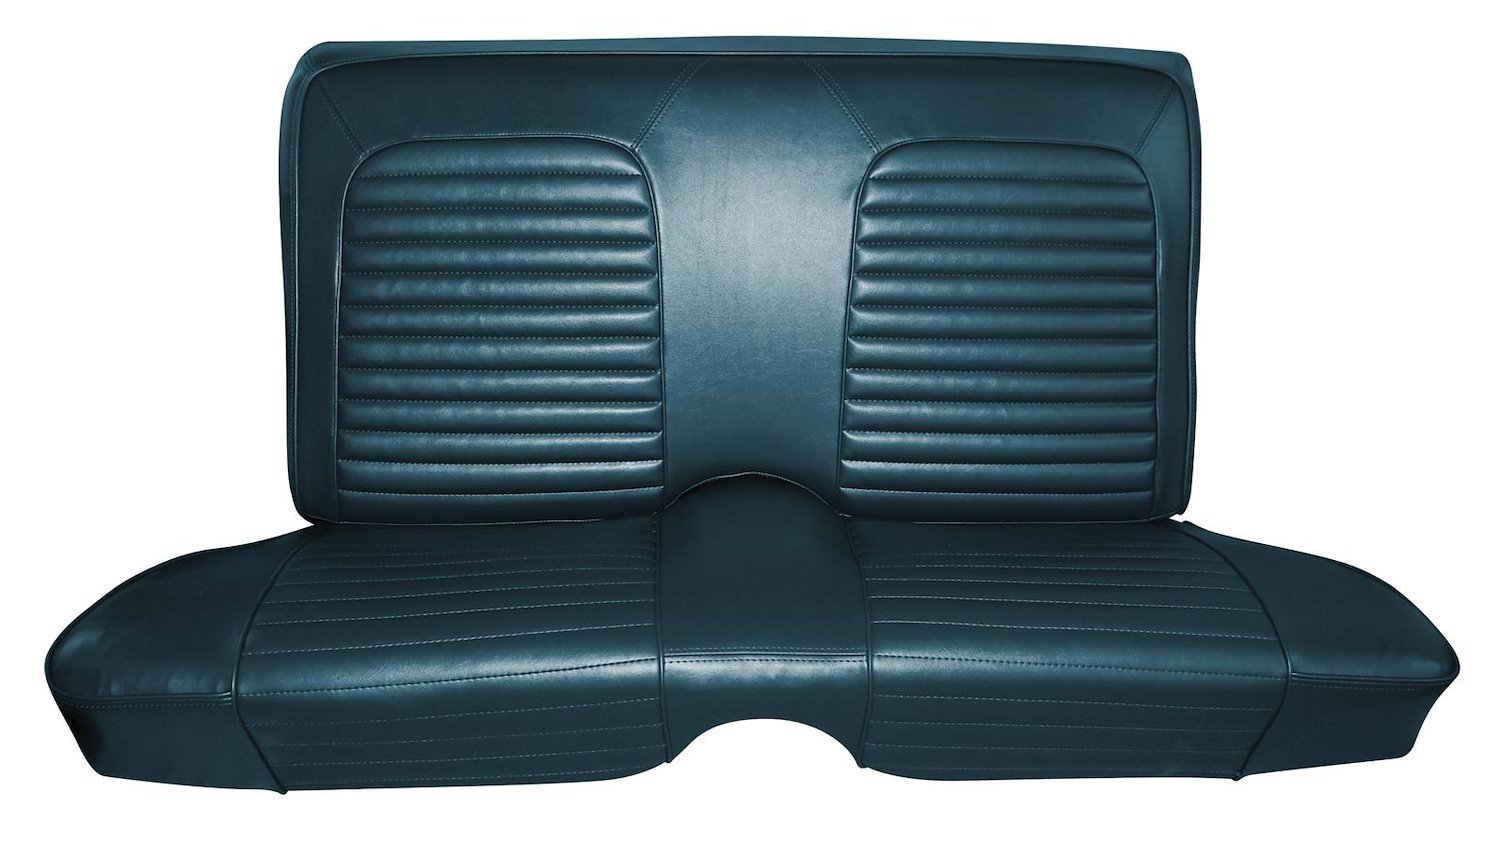 1965 Ford Falcon Futura 2-Door Hardtop Interior Two-Tone Rear Bench Seat Upholstery Set